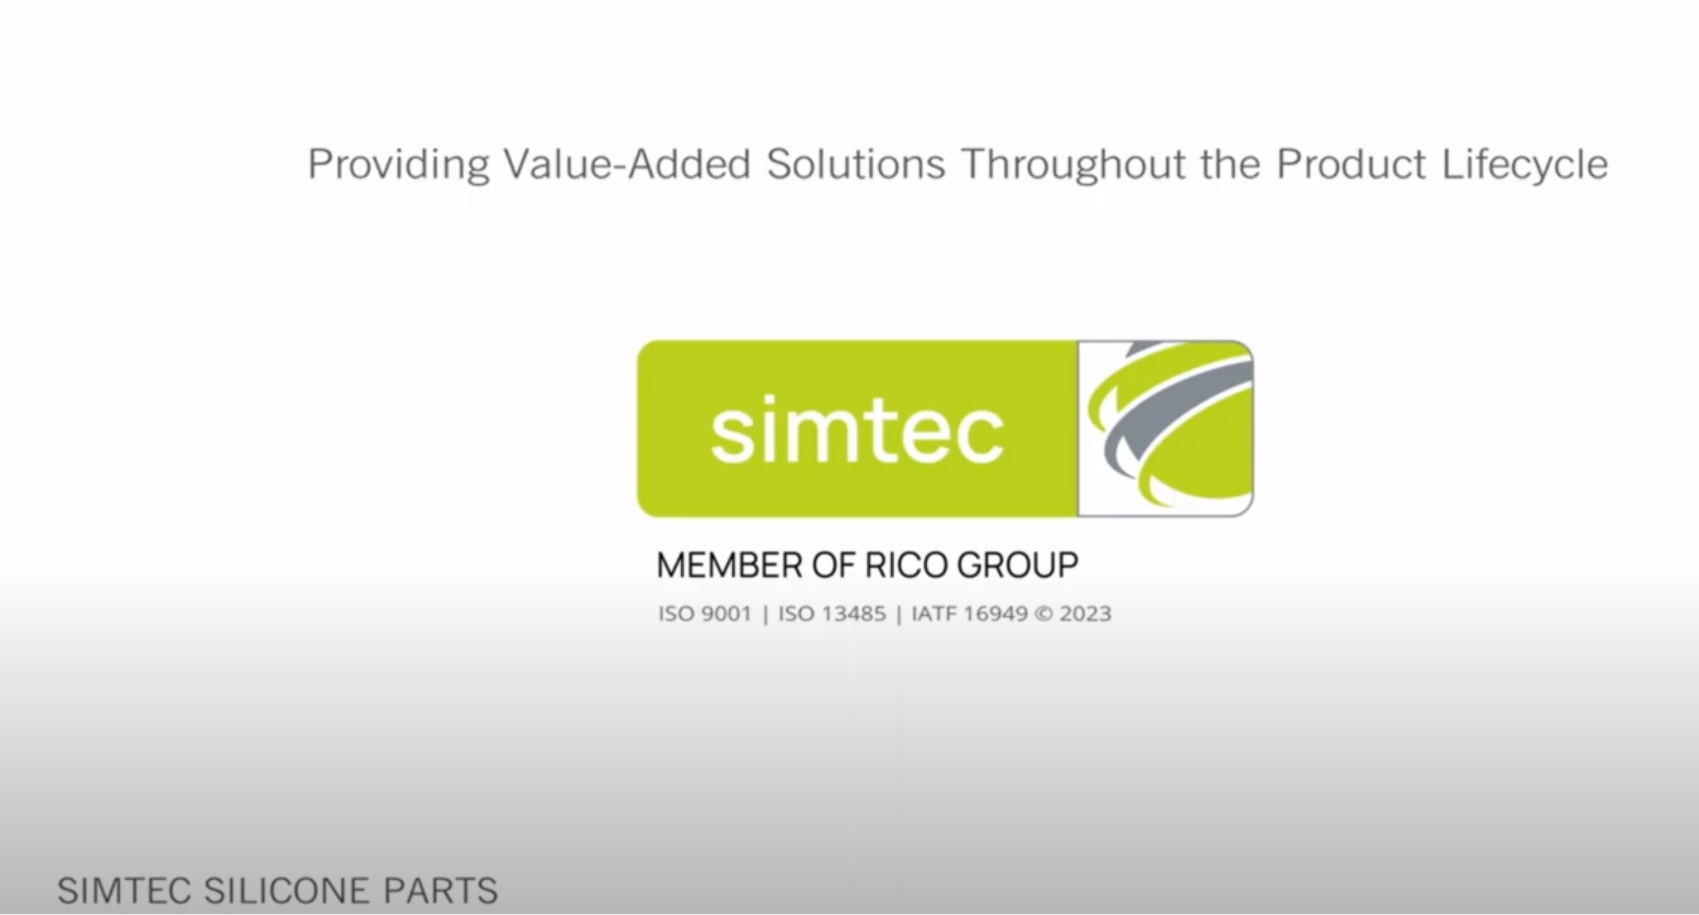 SIMTEC Portfolio of Services